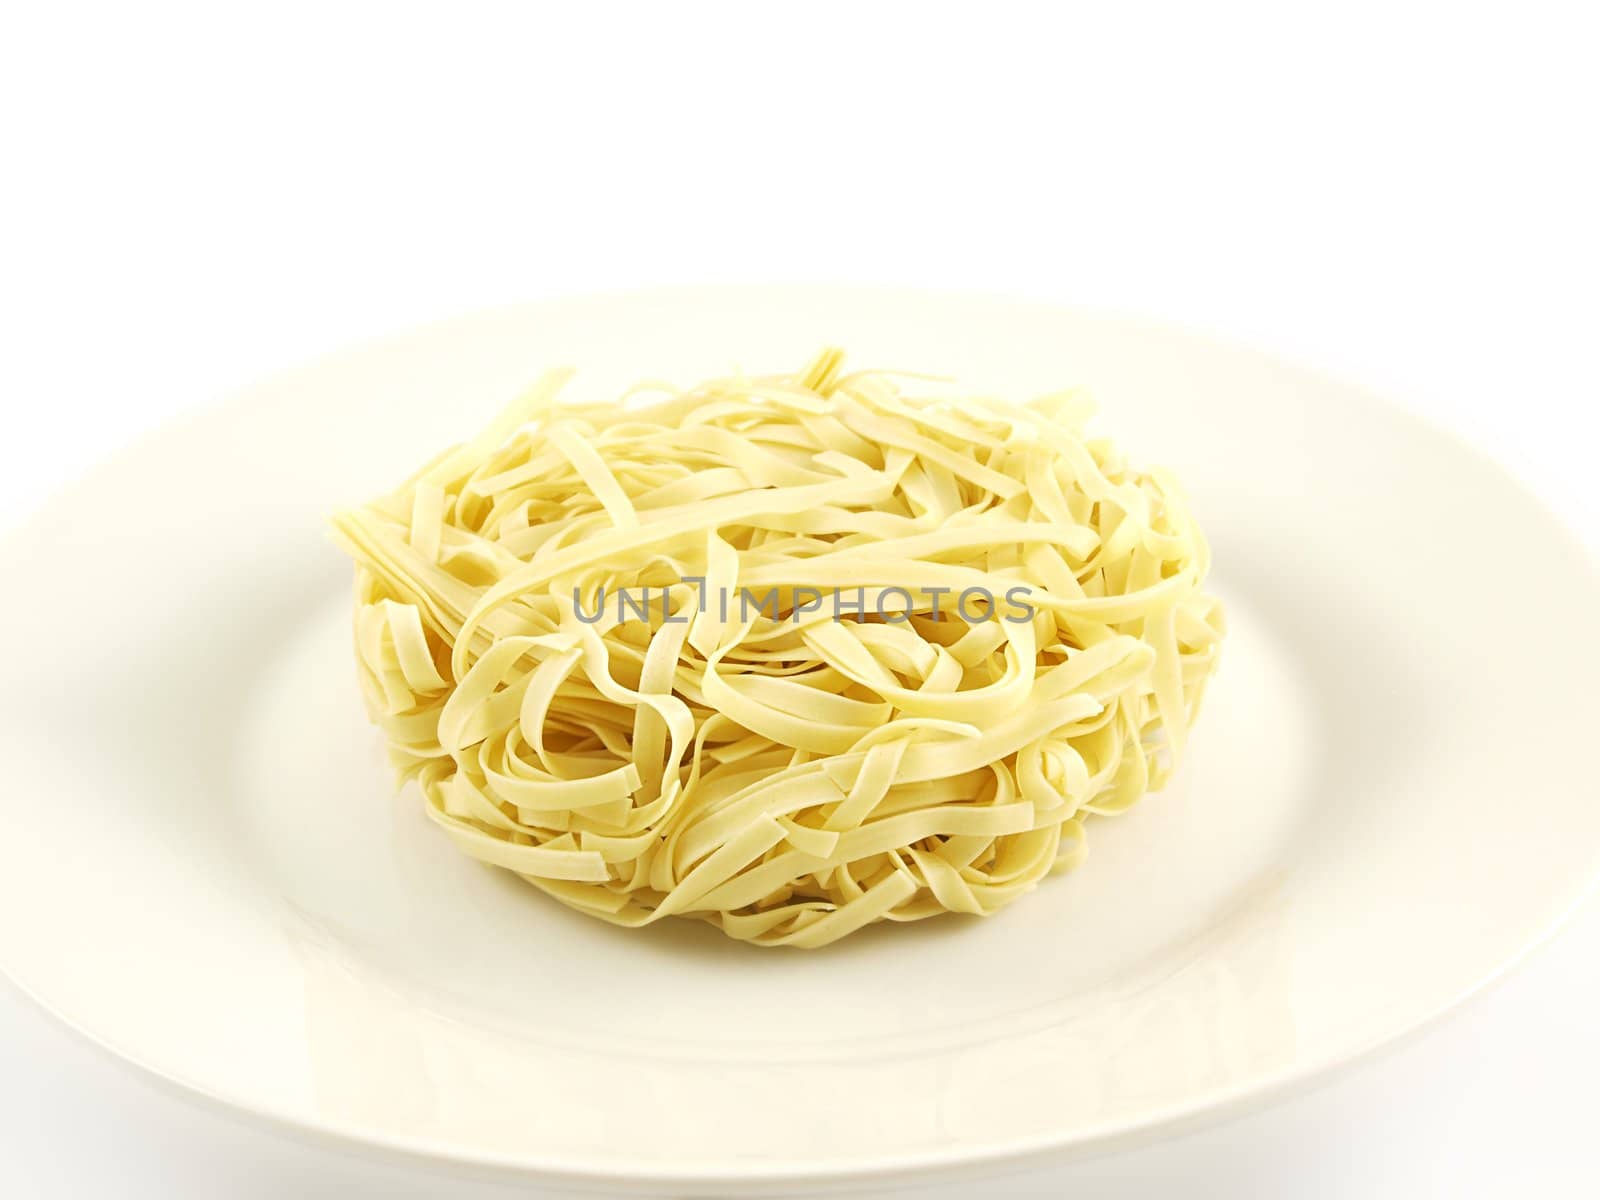 Round noodle, isolated on white plate, towards white background